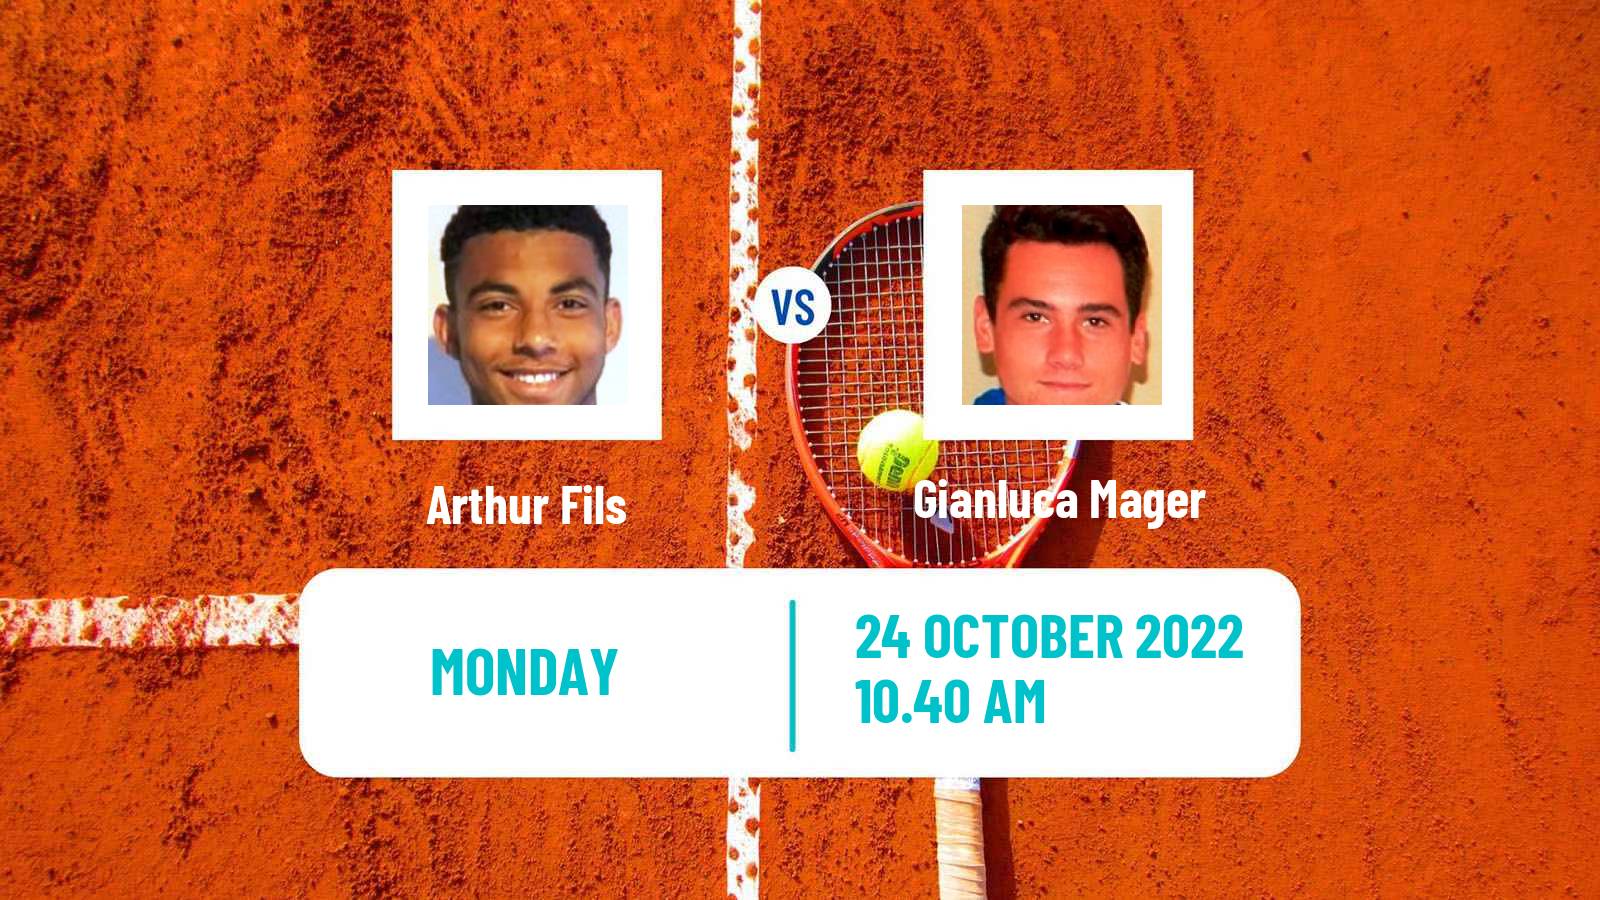 Tennis ATP Challenger Arthur Fils - Gianluca Mager